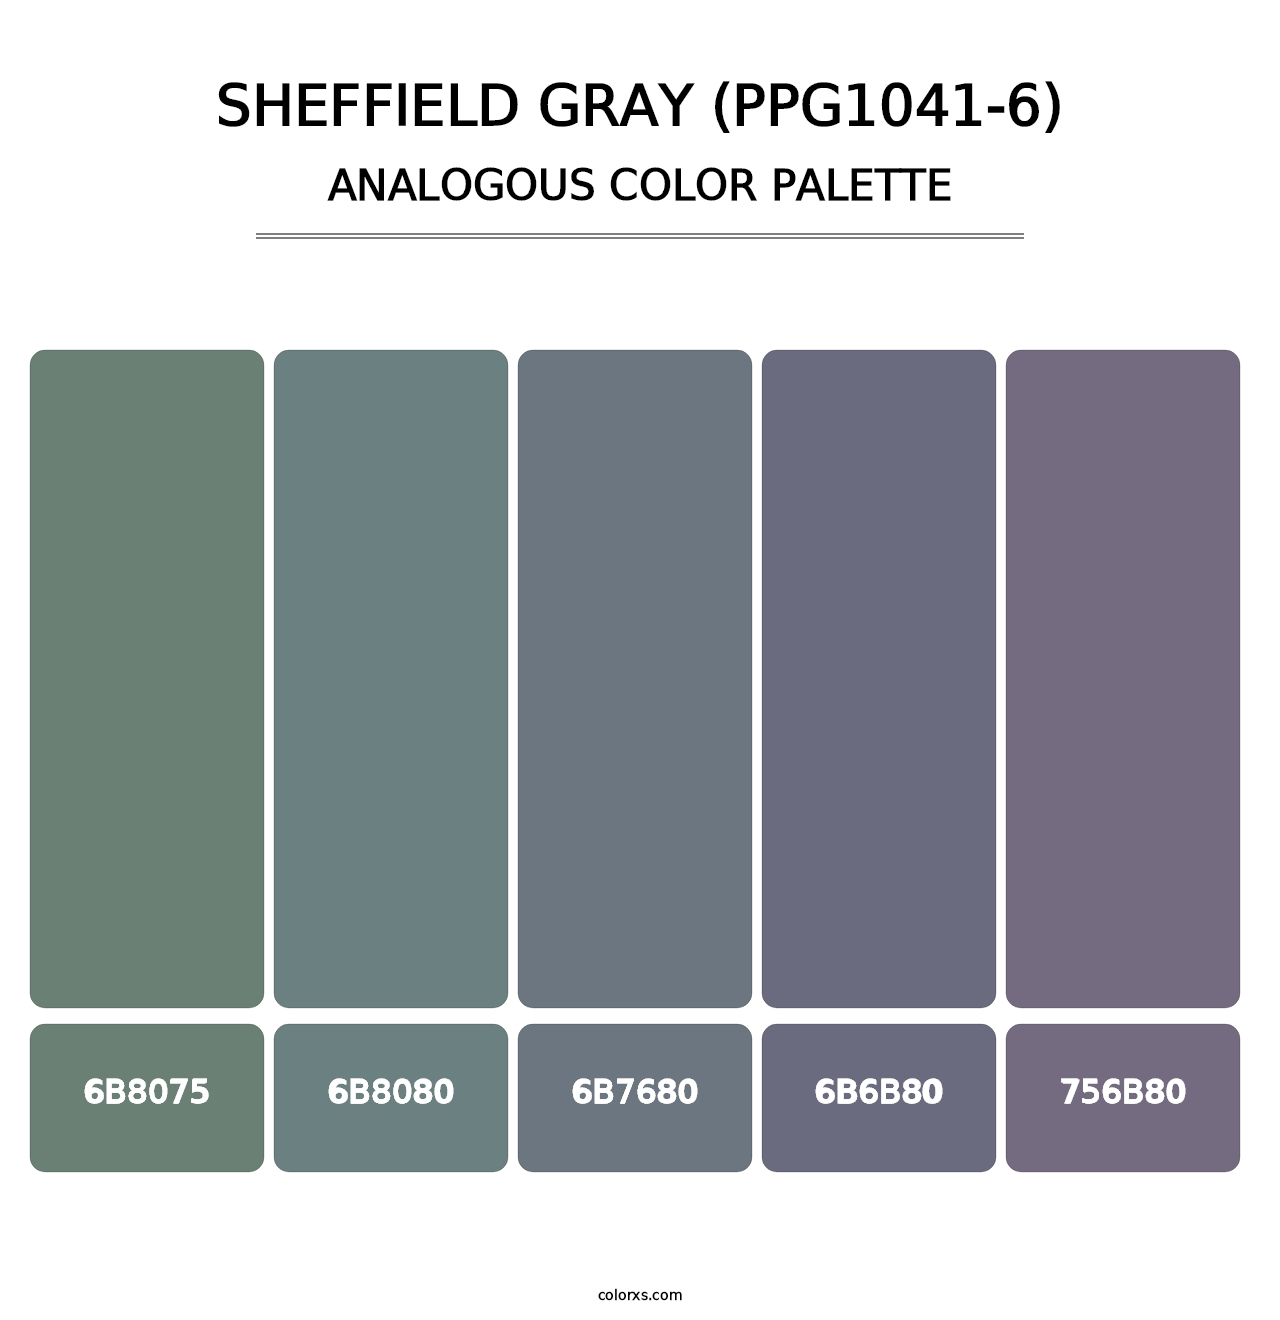 Sheffield Gray (PPG1041-6) - Analogous Color Palette